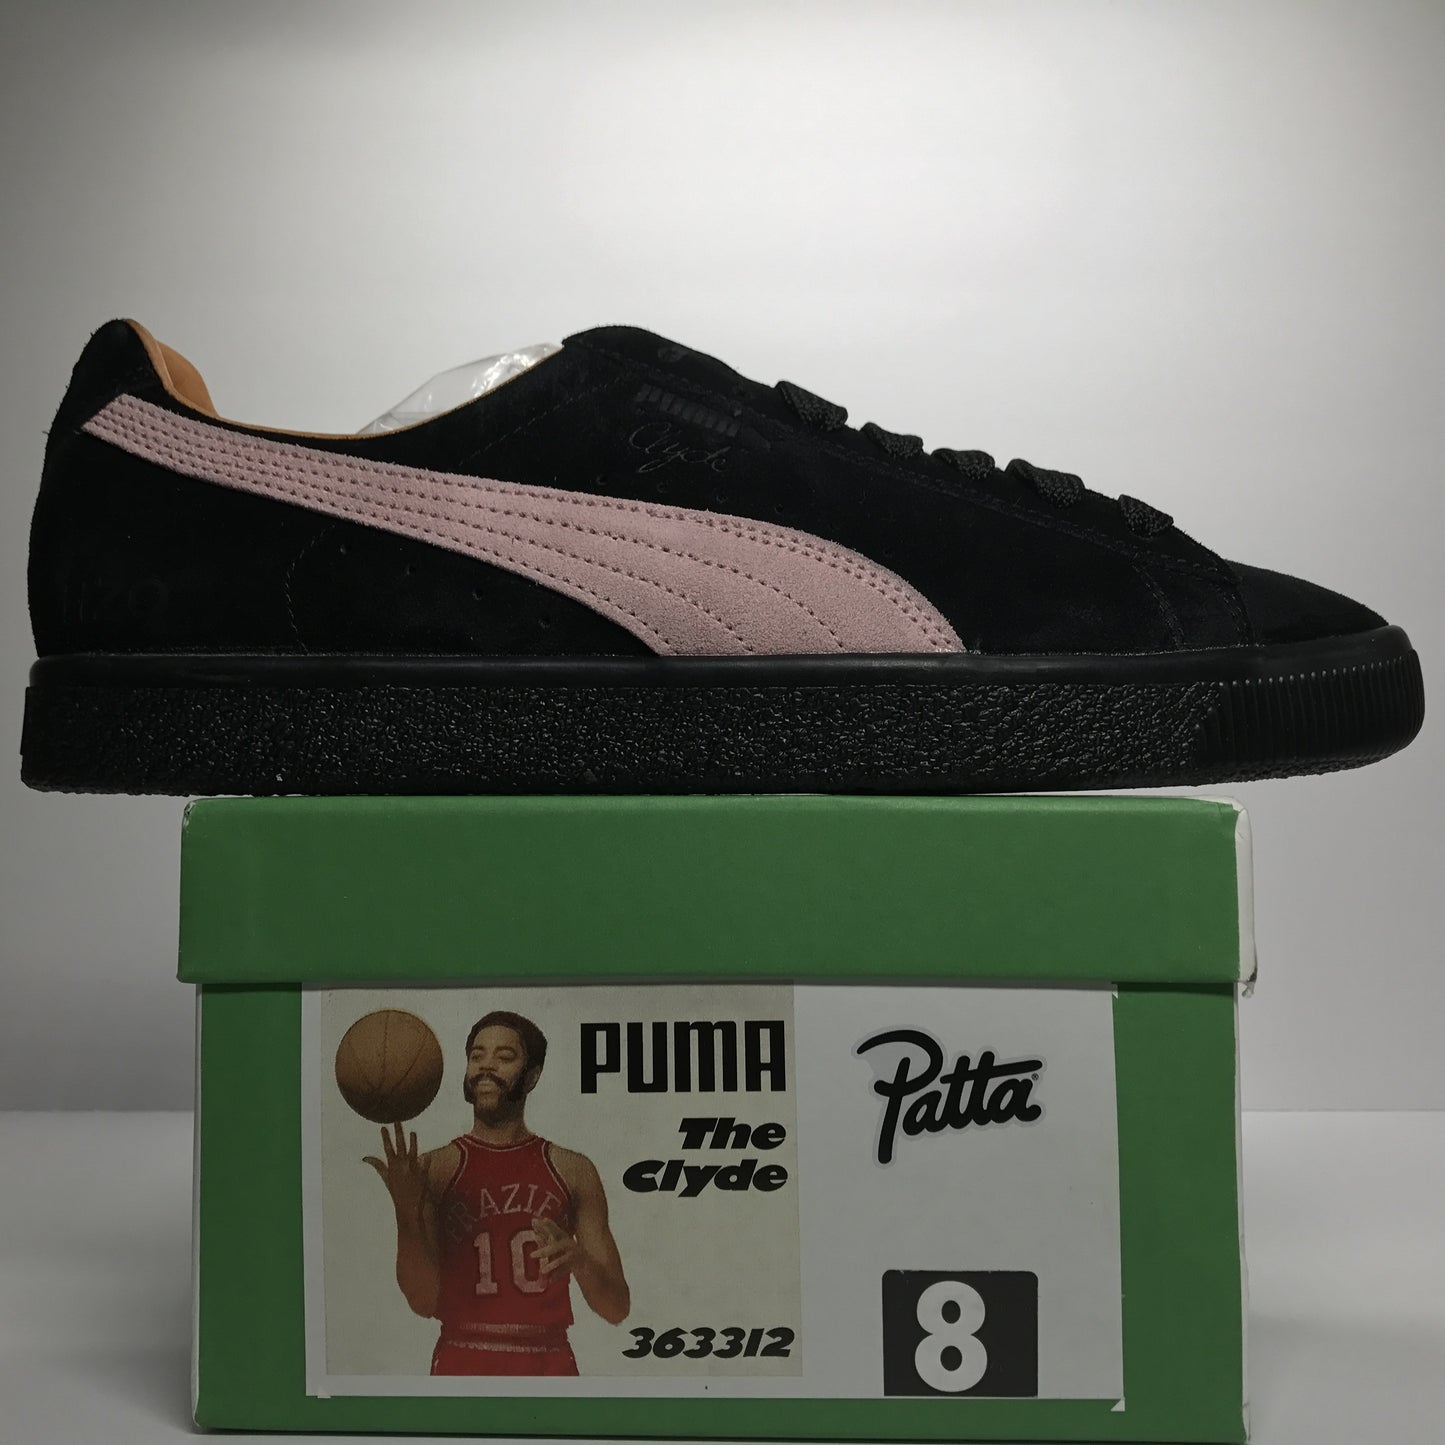 DS Puma Clyde x Patta Amsterdam Size 8